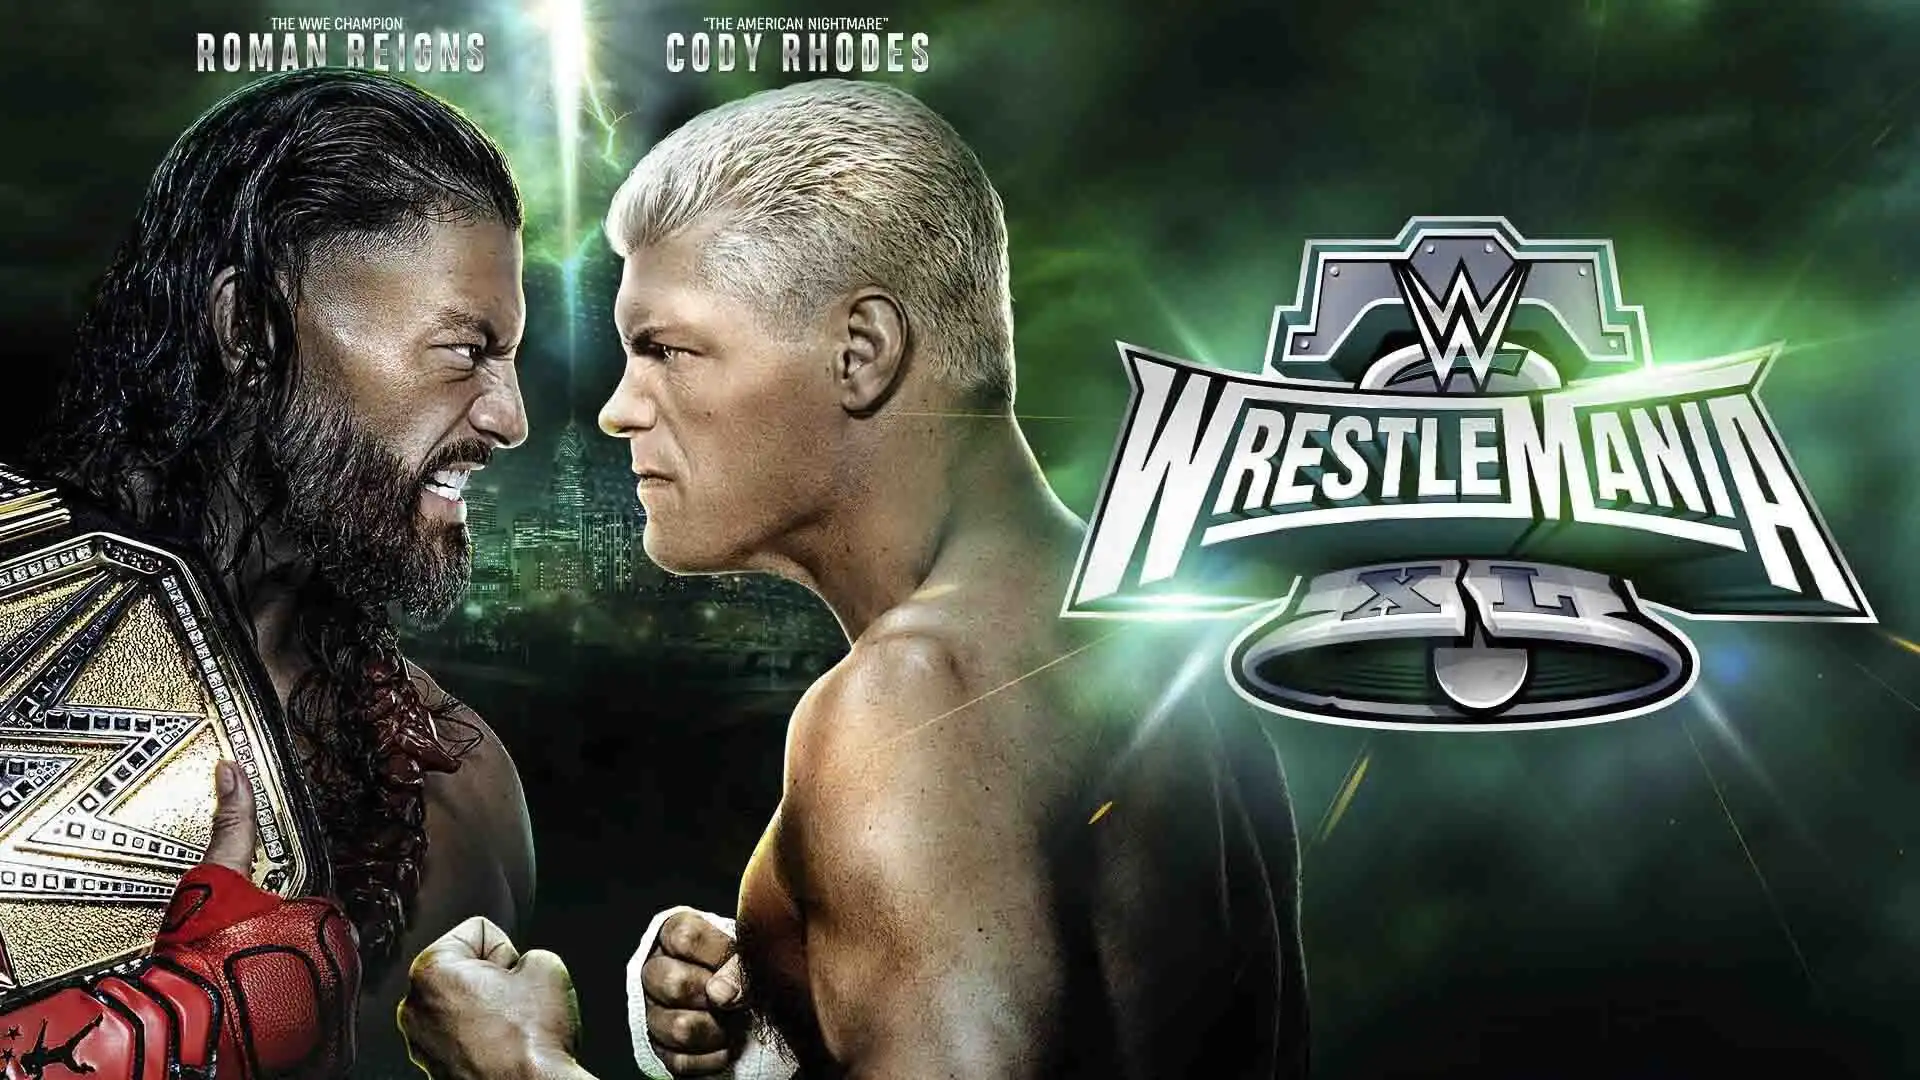 WWE Undisputed Universal Championship - Roman Reigns vs Cody Rhodes (Night 2):